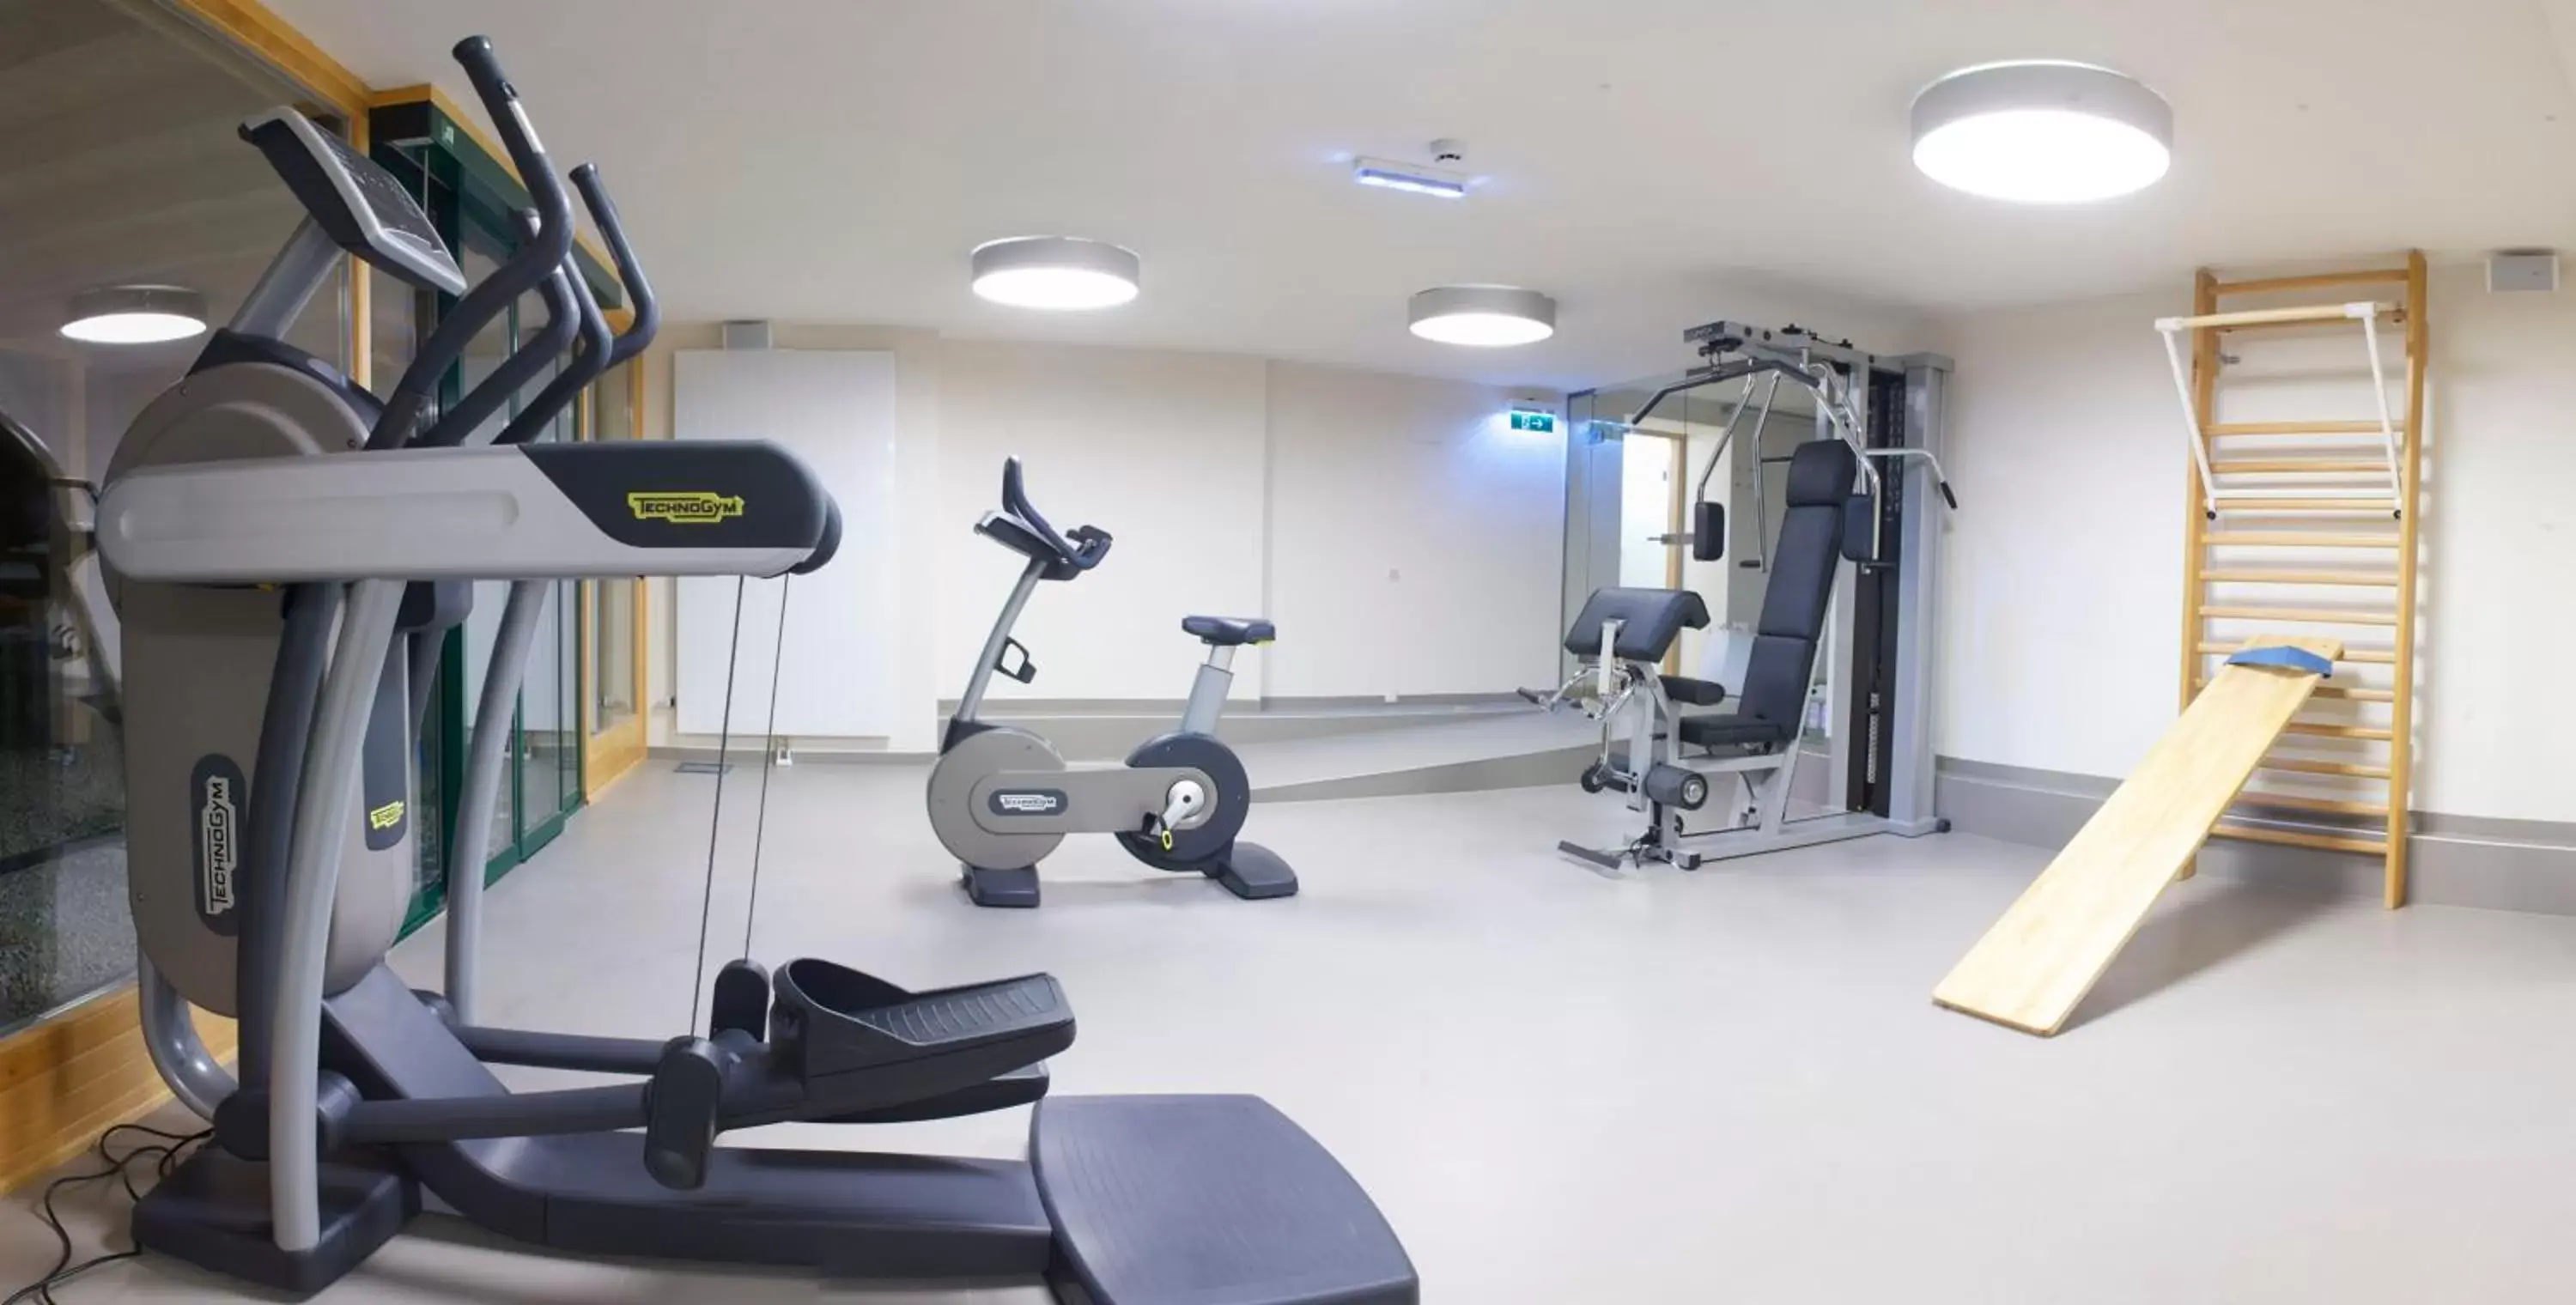 Fitness centre/facilities, Fitness Center/Facilities in Seevilla Freiberg